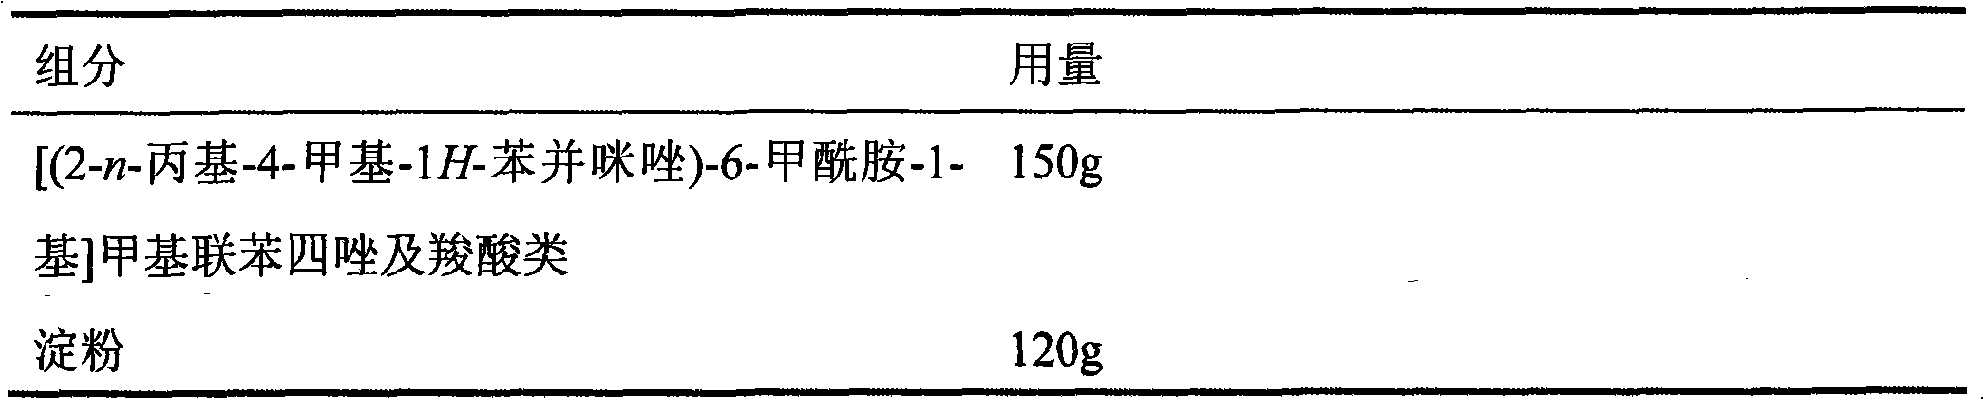 Compound of losartan compound or its medical salt and calcium channel blocker or its medical salt